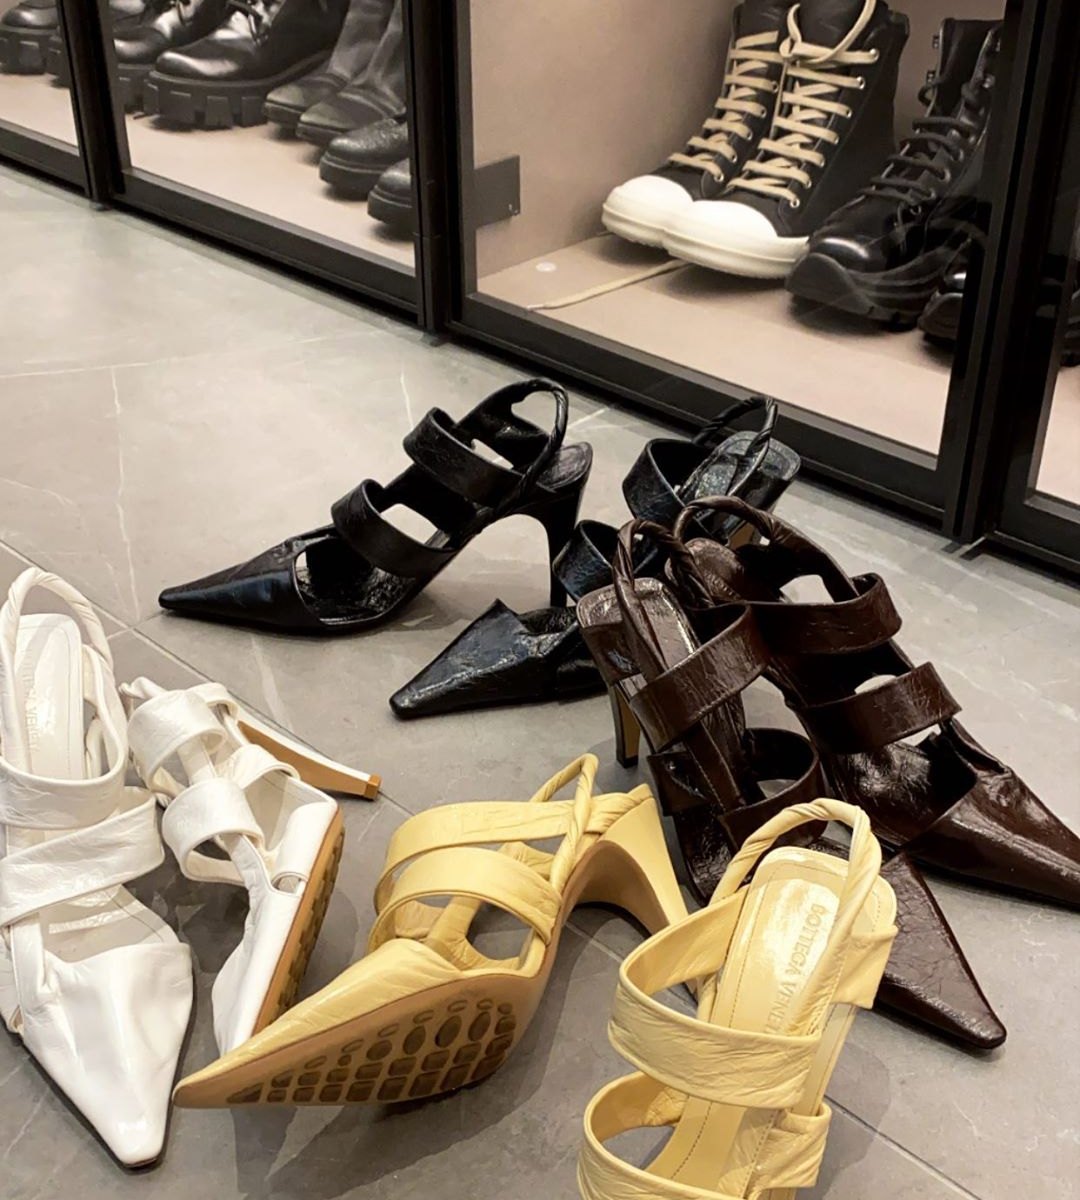 Take a tour of the Kylie Jenner shoe closet